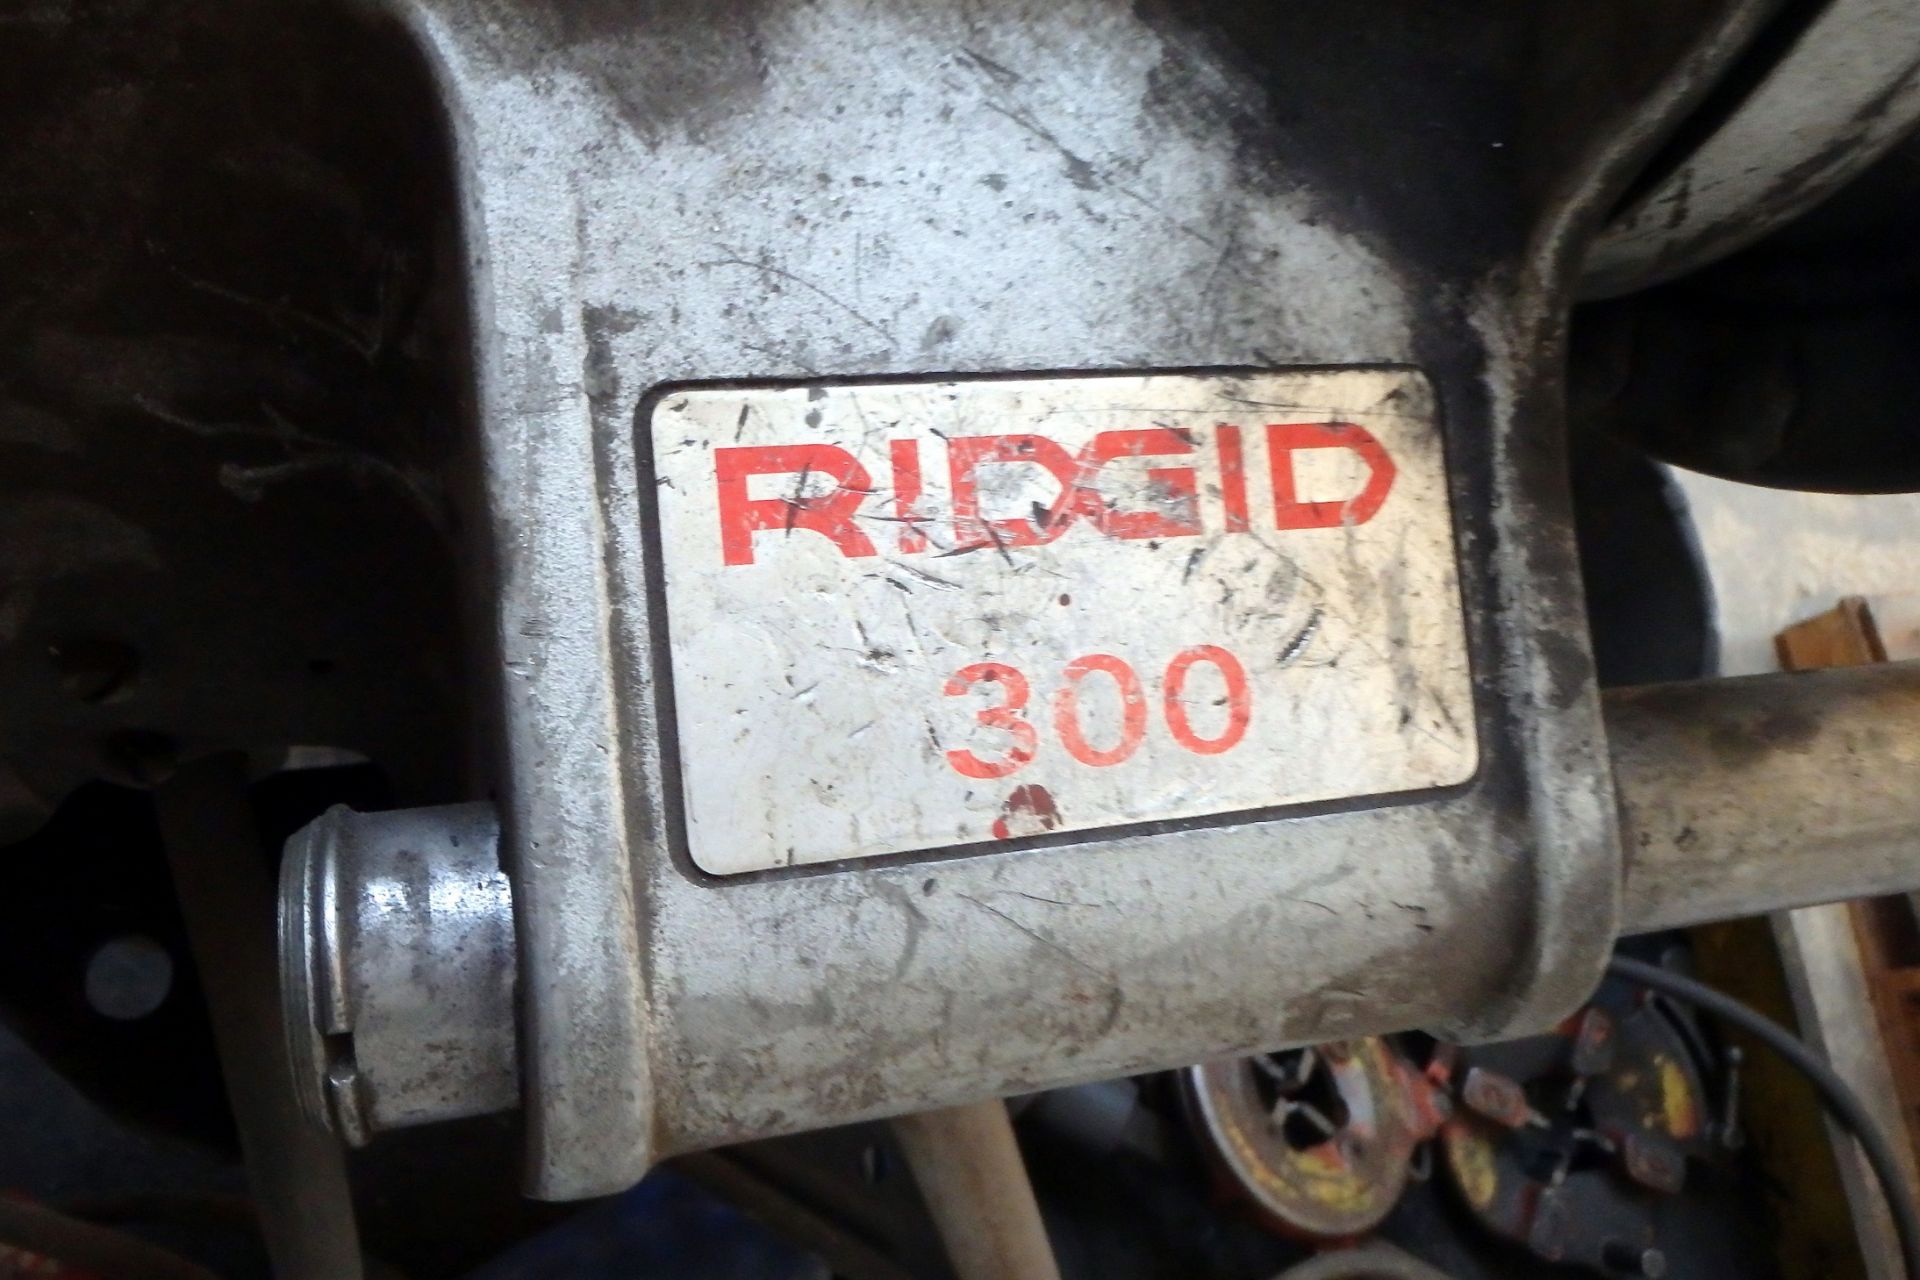 Rigid 300 Power Pipe Threader - Image 4 of 7